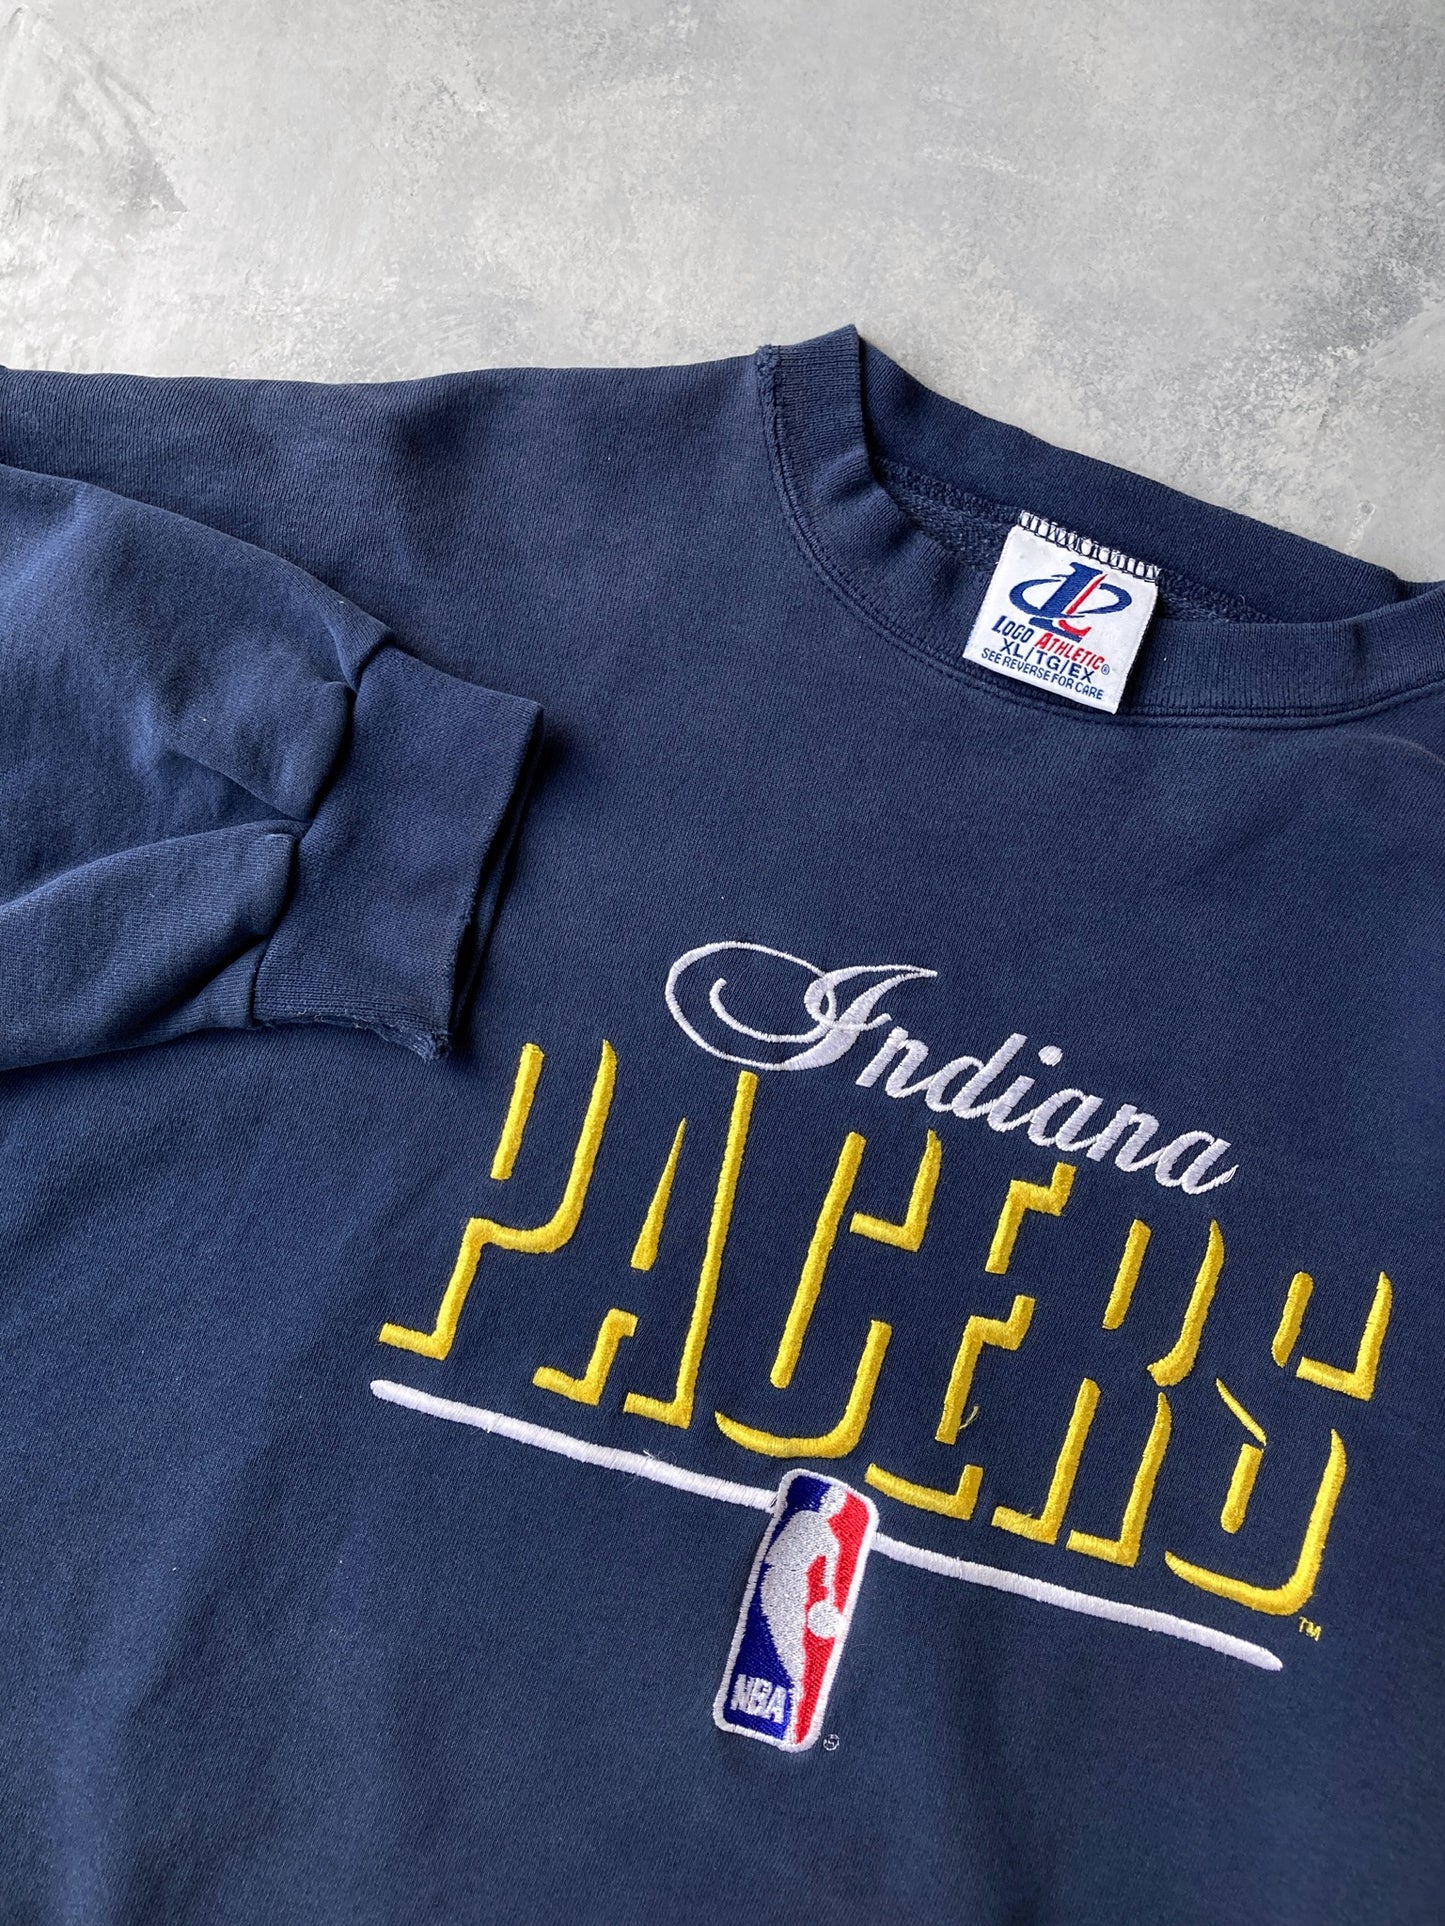 Indiana Pacers Sweatshirt 90's - XL